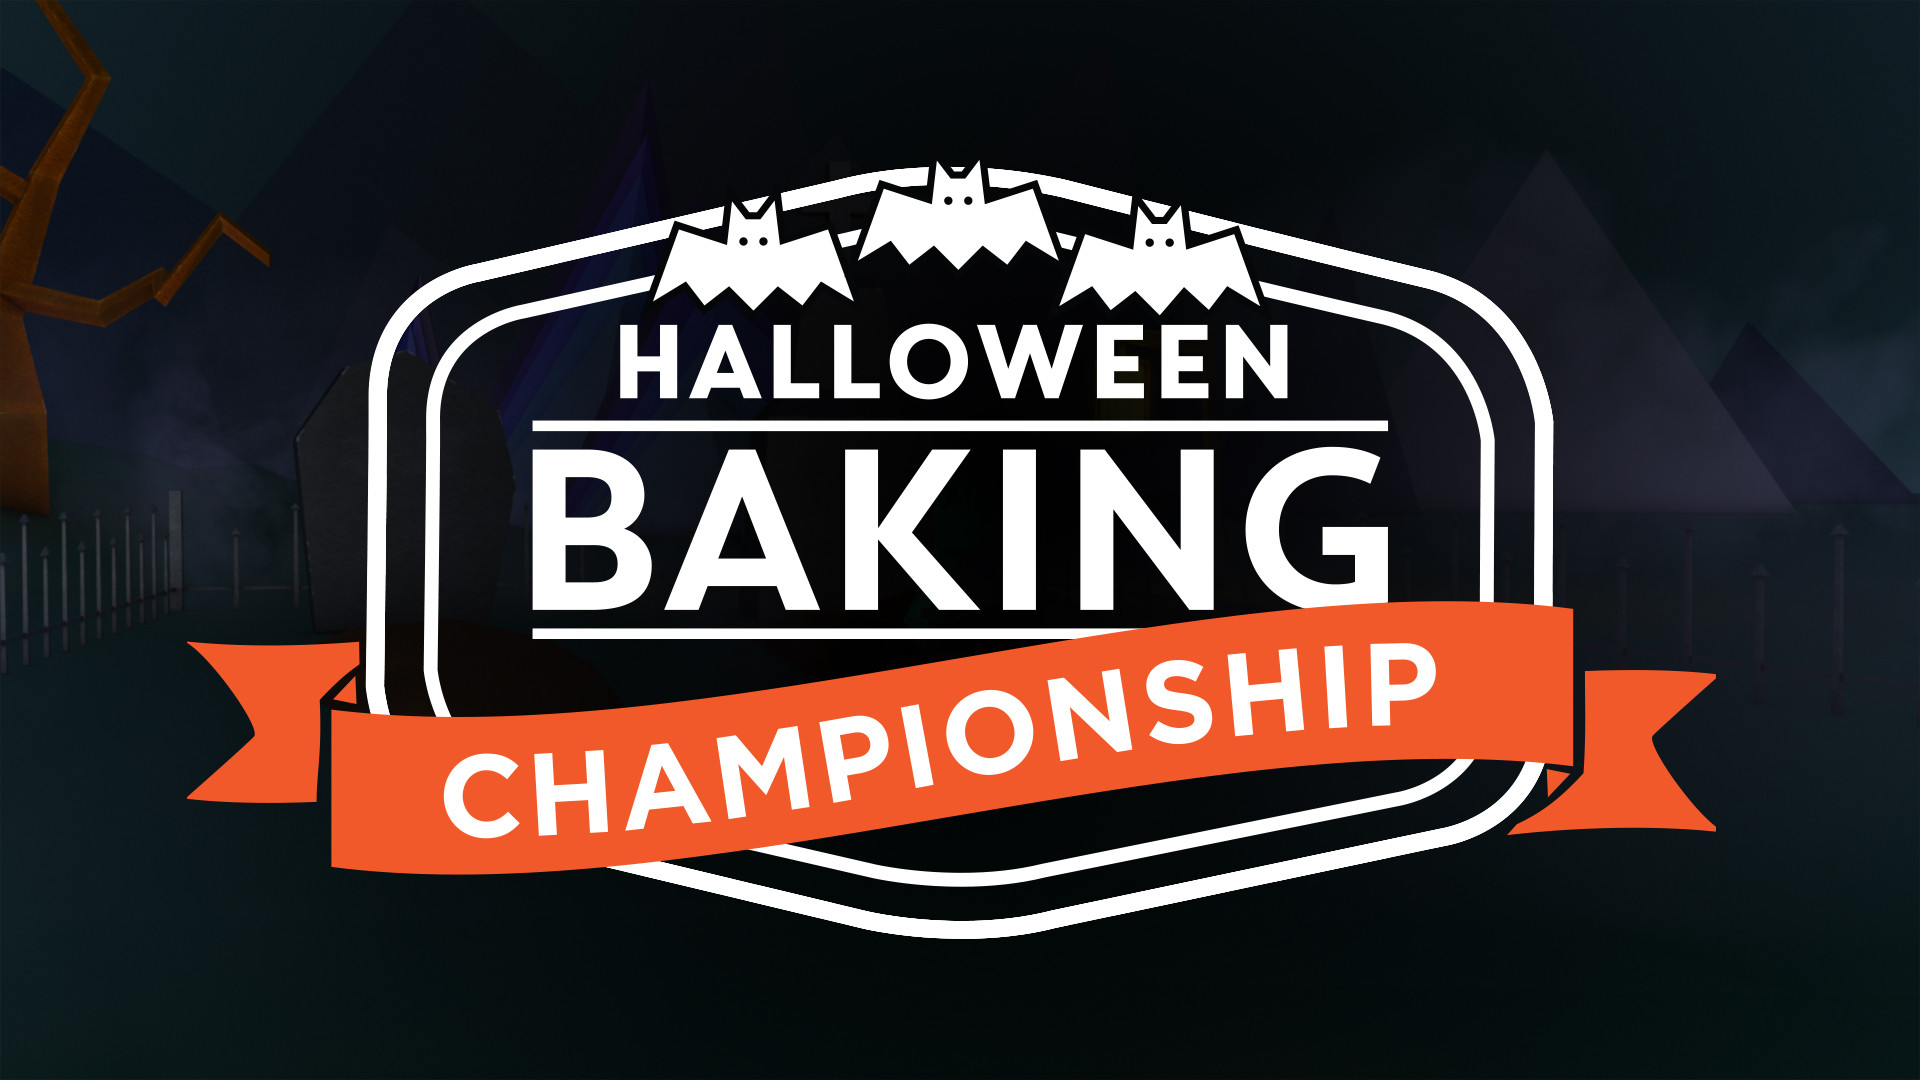 Food Network Halloween Baking Championship
 Halloween Baking Championship 2016 Season Kids